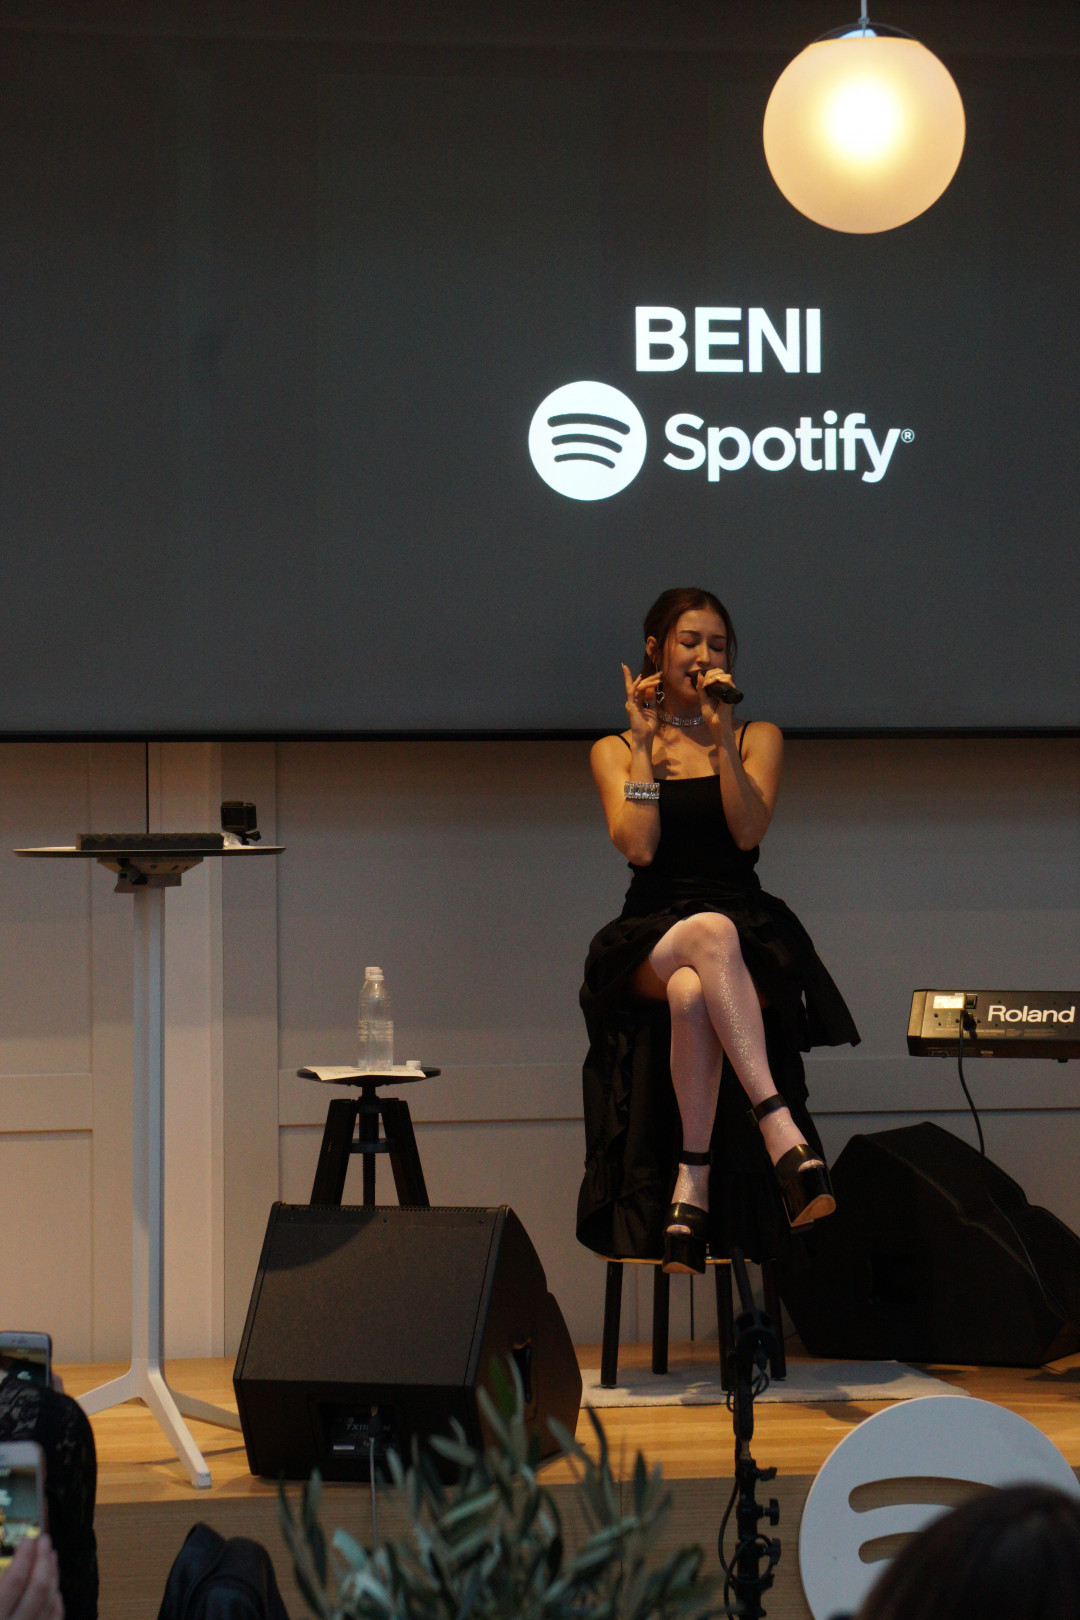 BENI、Spotifyの新イベント「Spotify New Music Place」で女性ファン限定のティーパーティー【レポート】